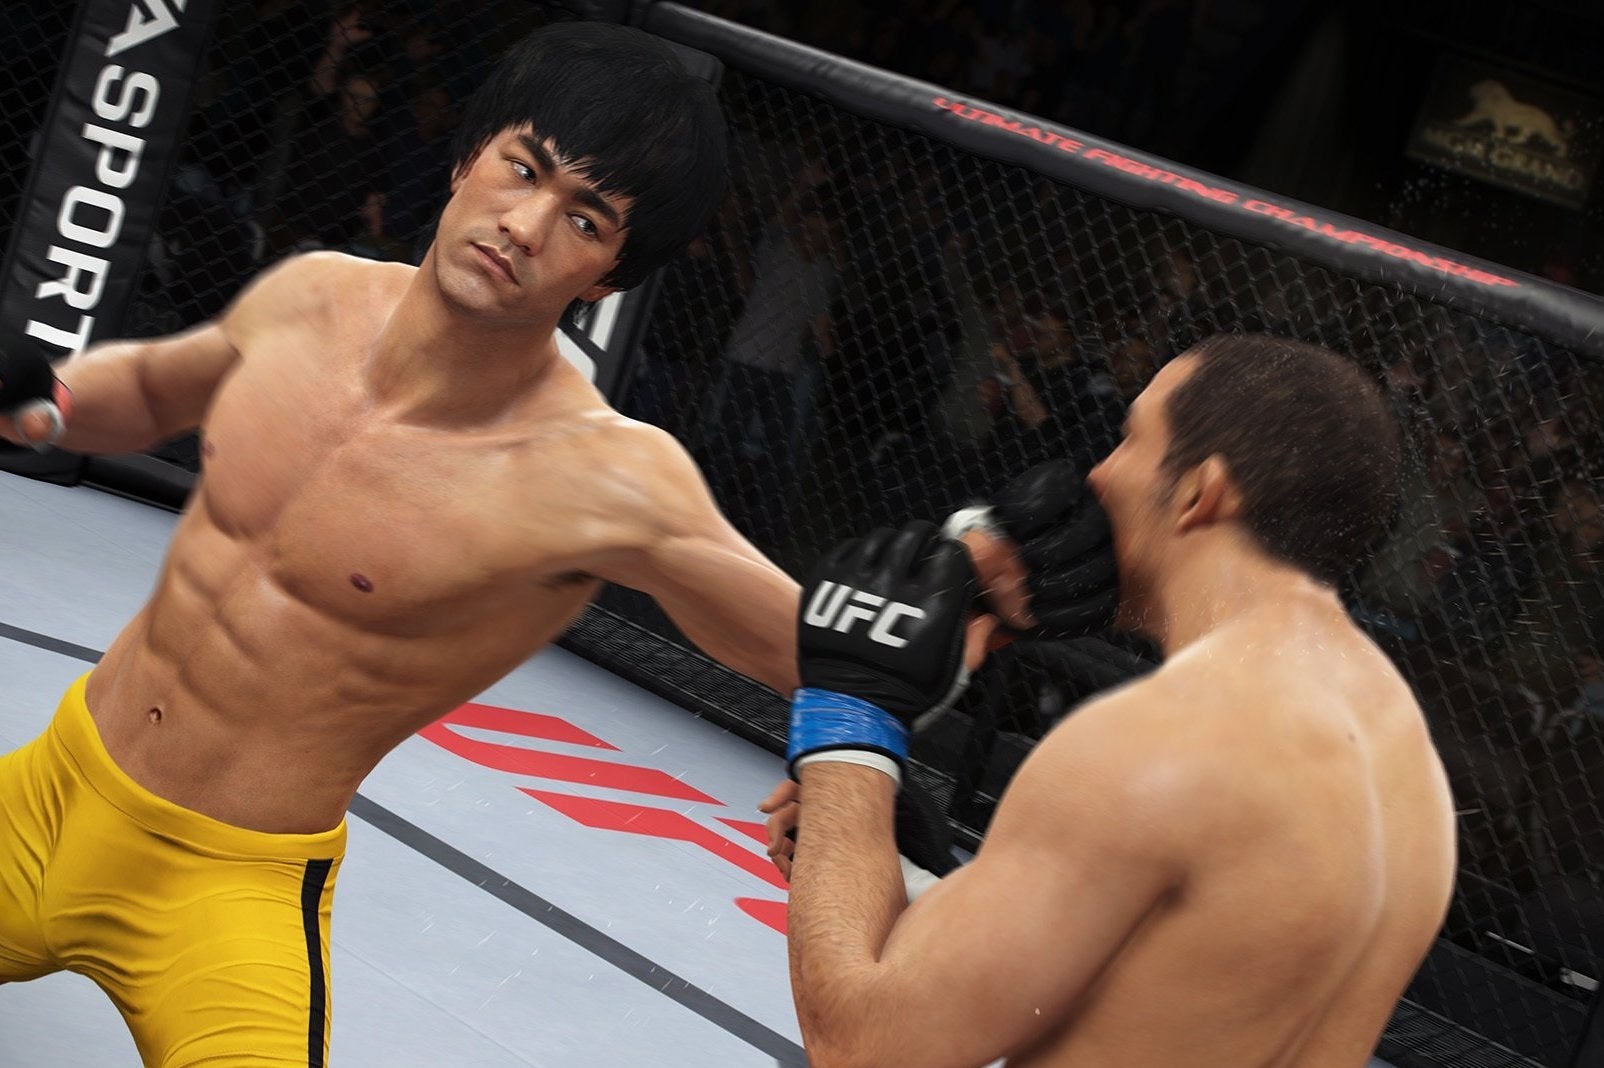 Imagem para EA Sports UFC - Vídeo Gameplay com Bruce Lee